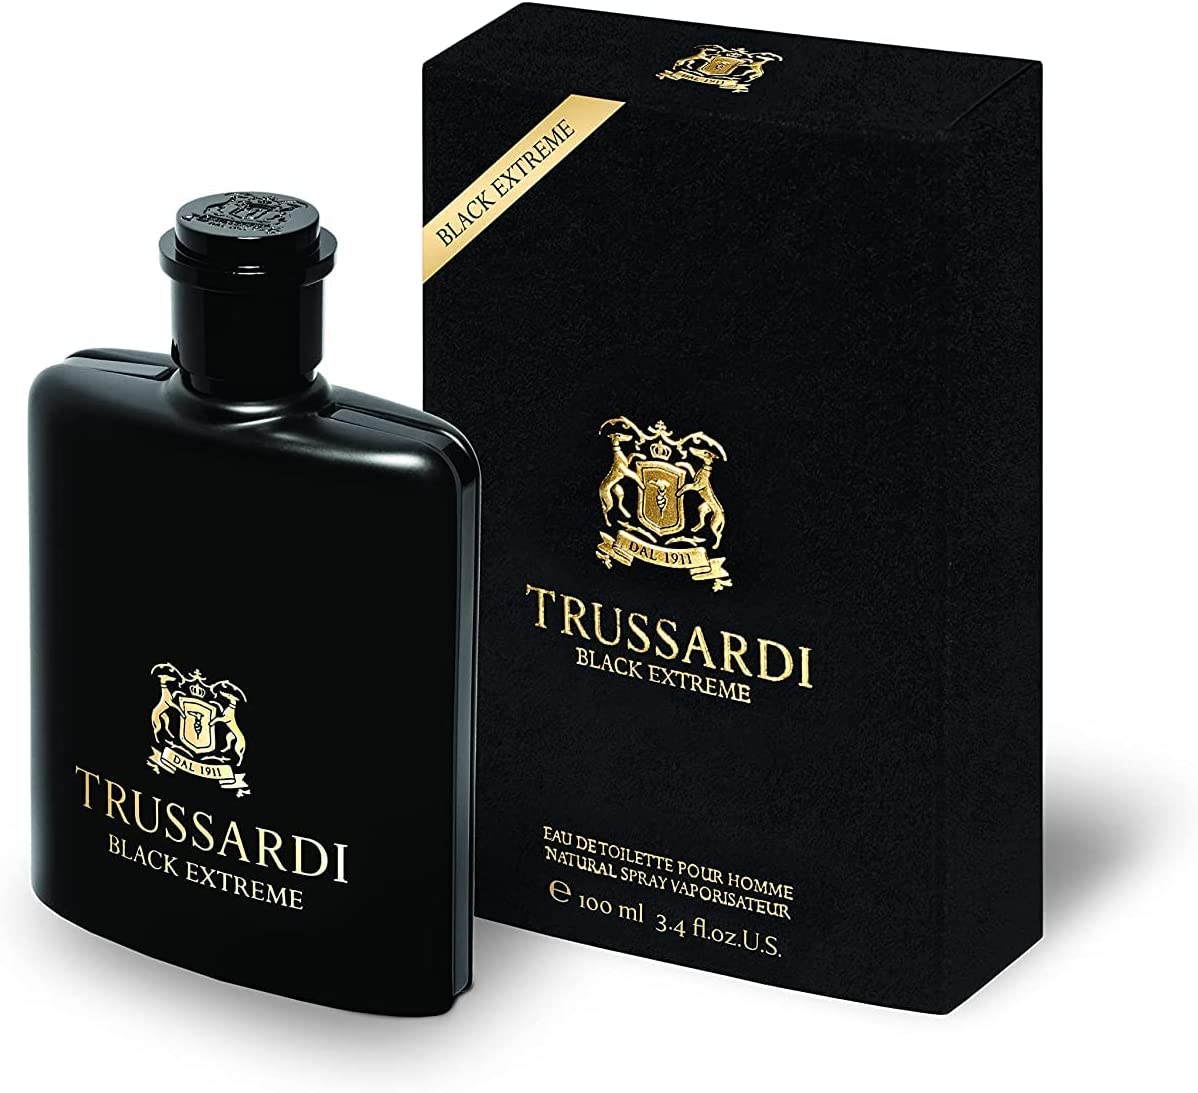 TRUSSARDI BLACK EXTREME EDT 100 ml spray